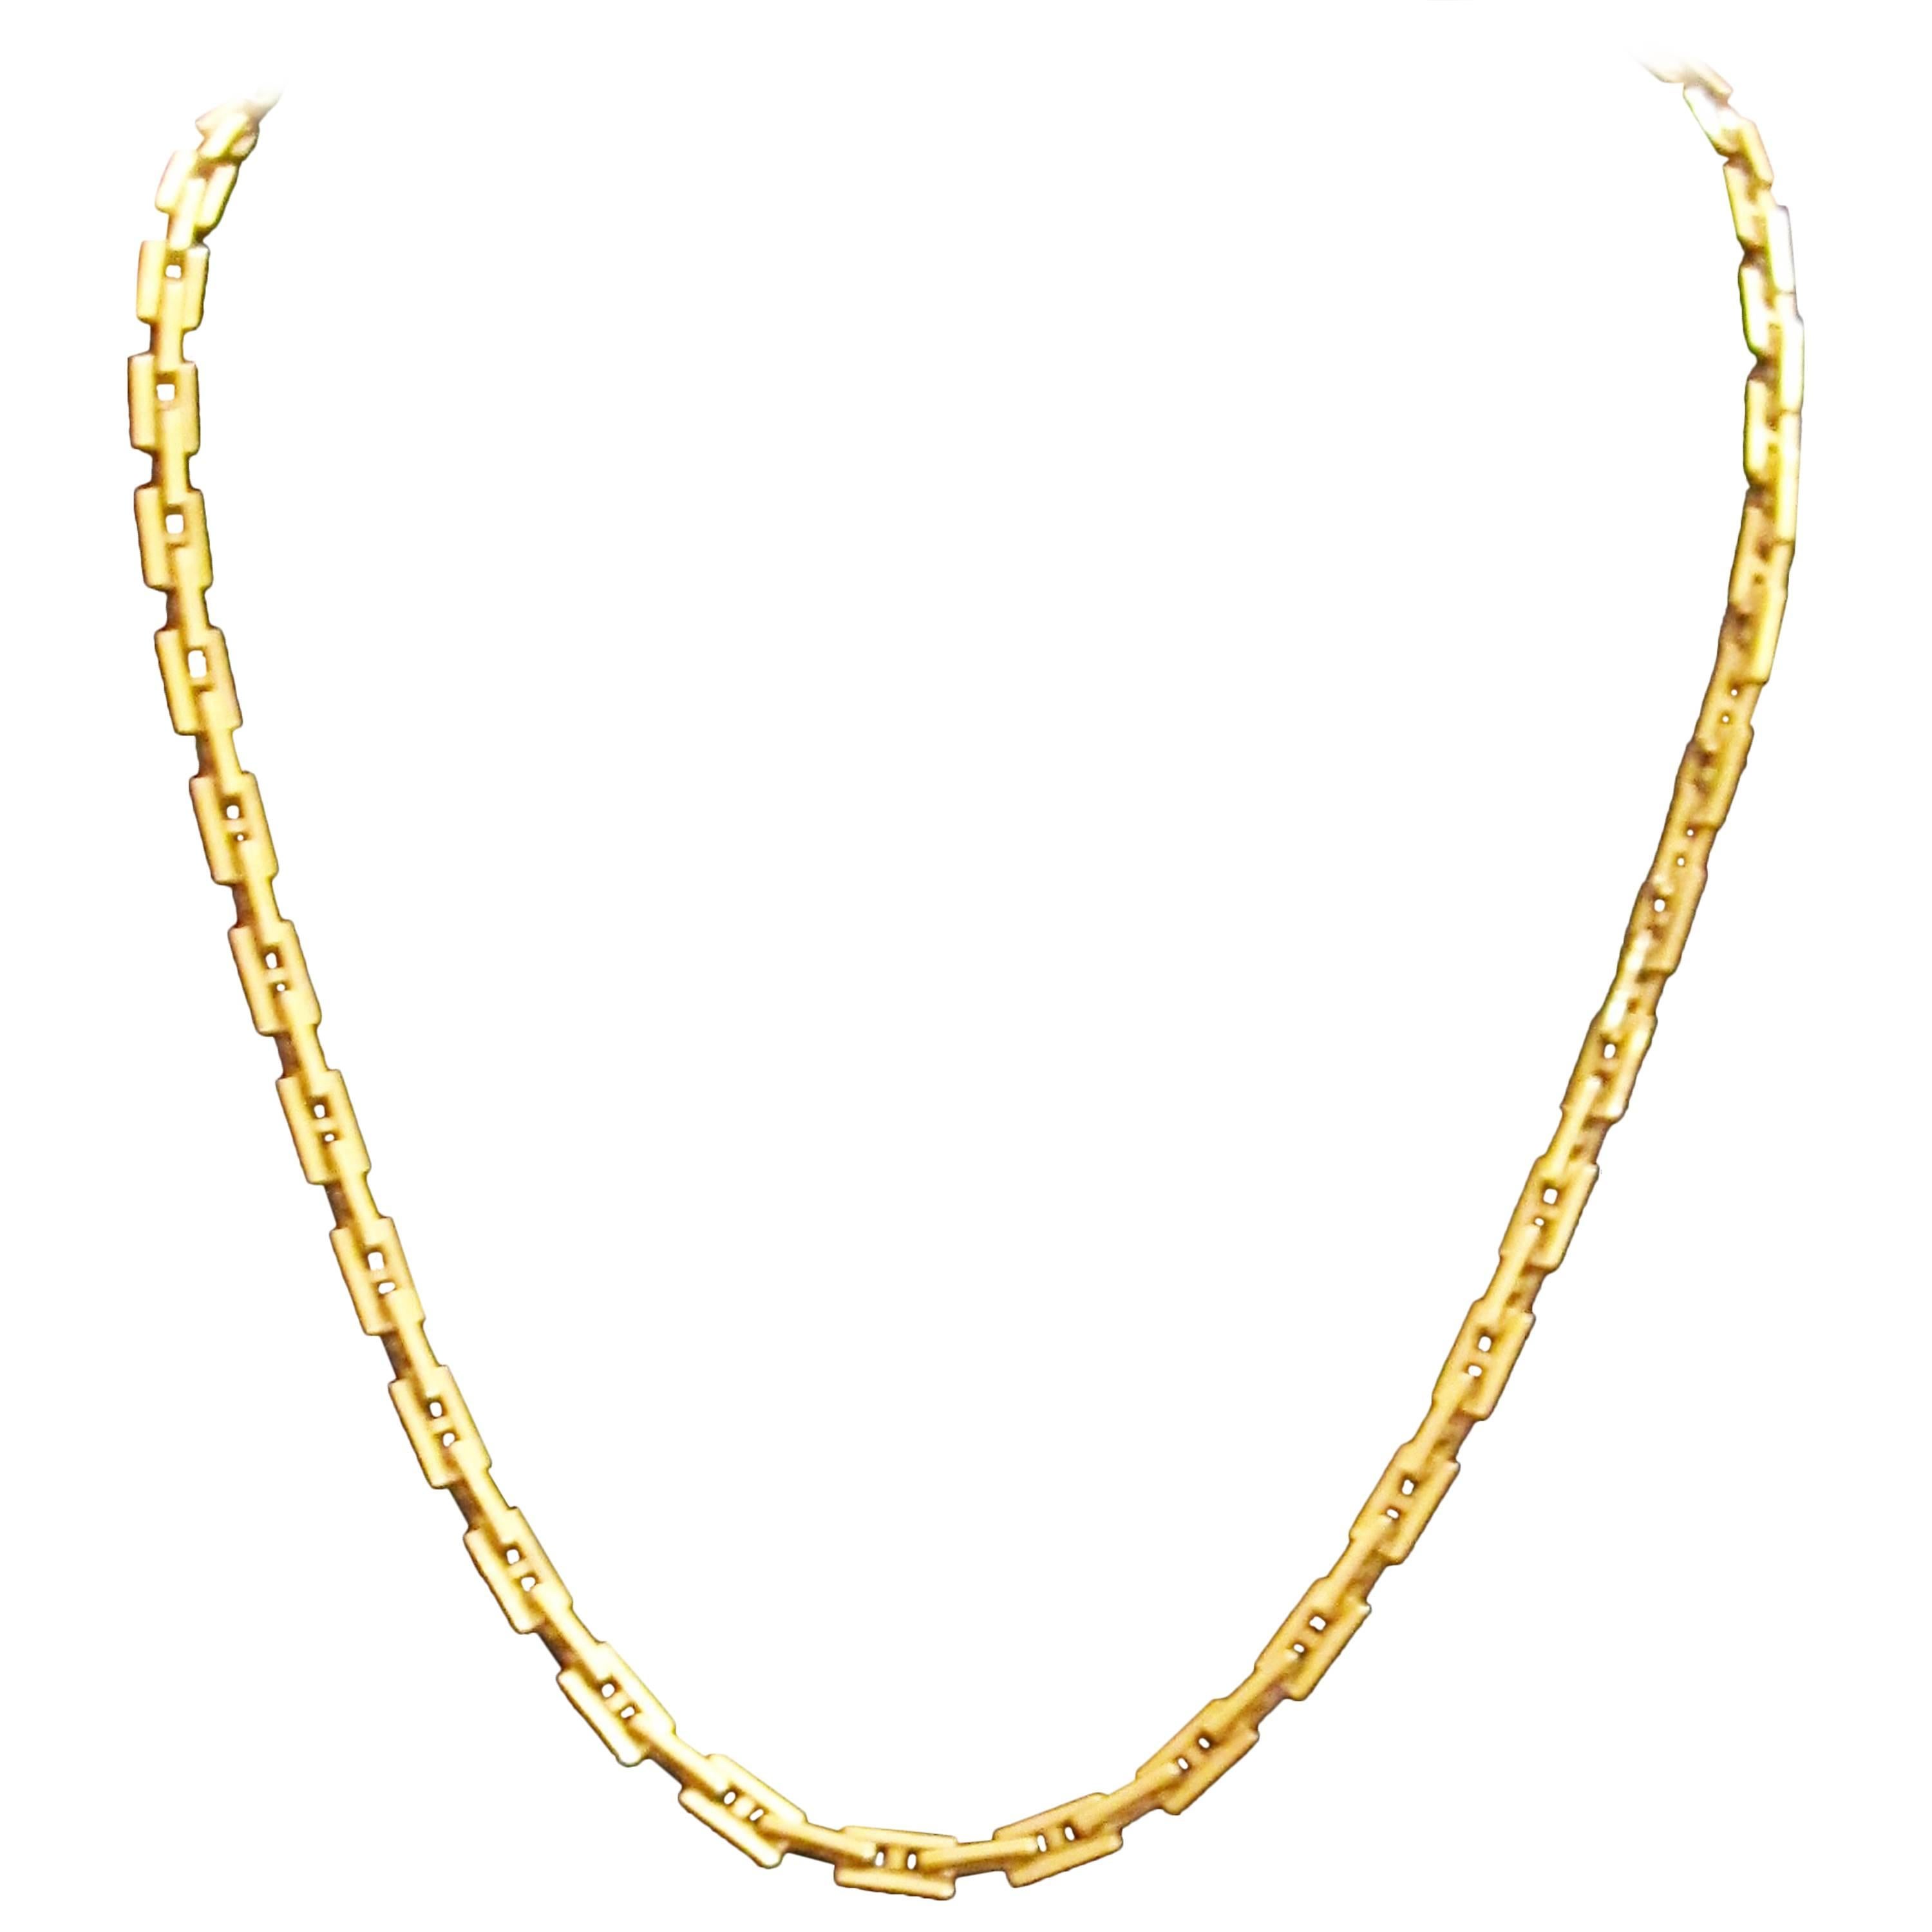 Hermès 'Hercules' 18 Karat Yellow Gold Necklace